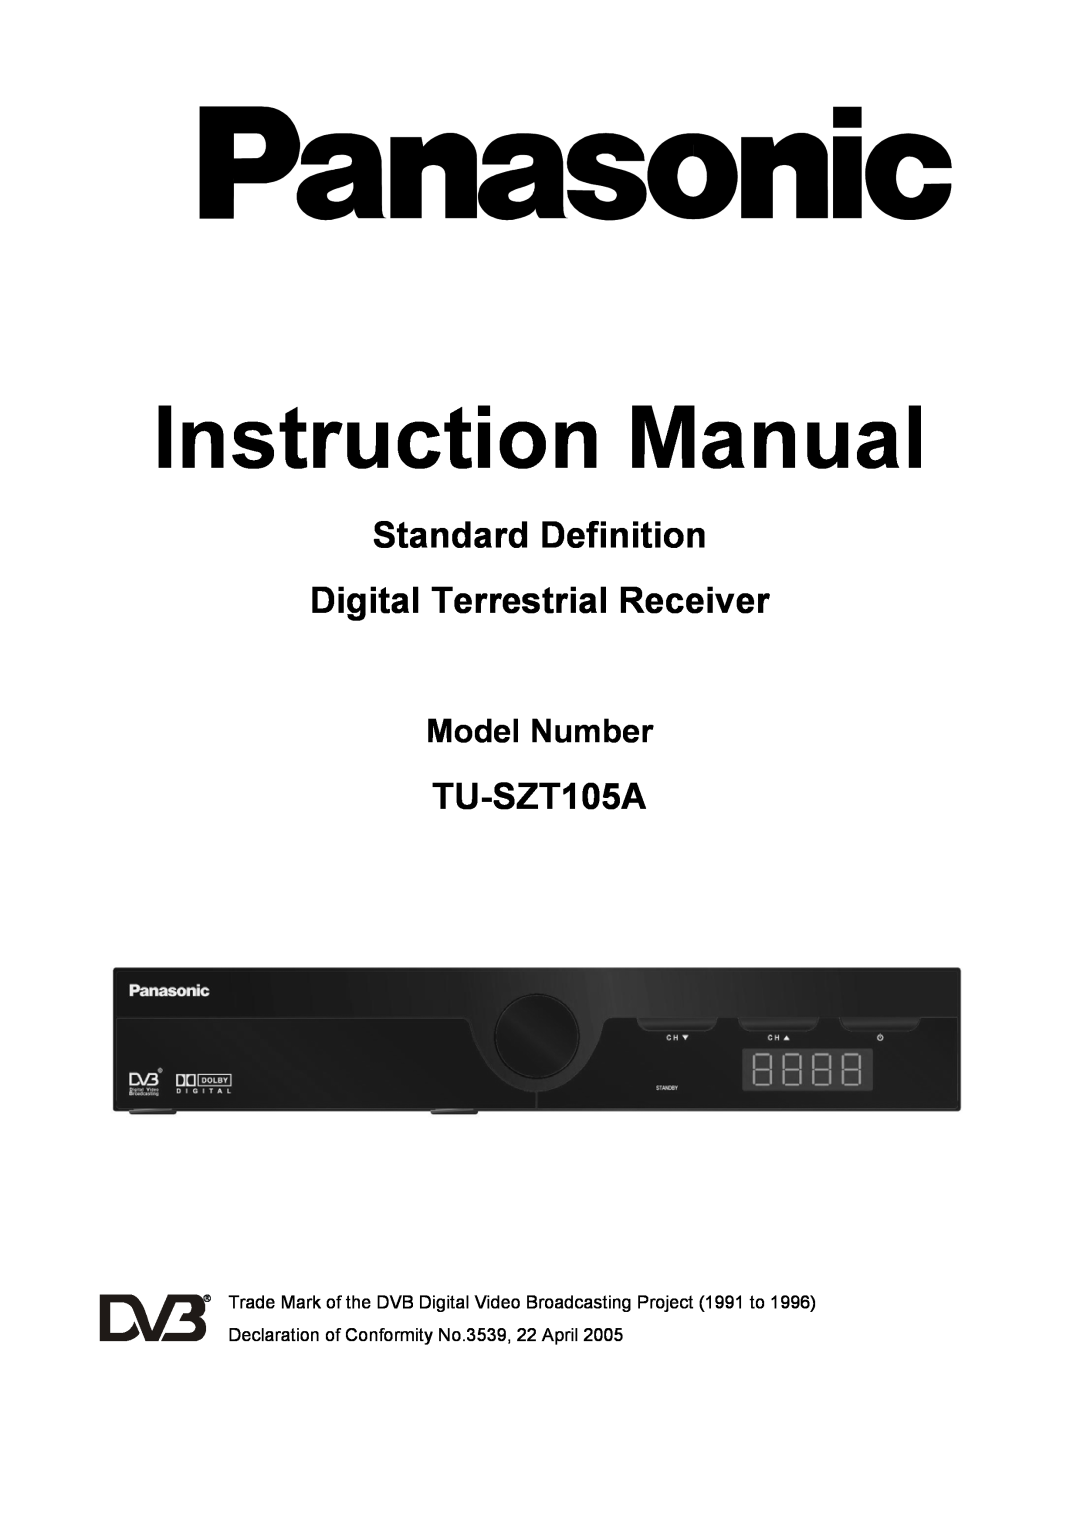 Technicolor - Thomson TU-SZT105A instruction manual Model Number, Standard Definition Digital Terrestrial Receiver 